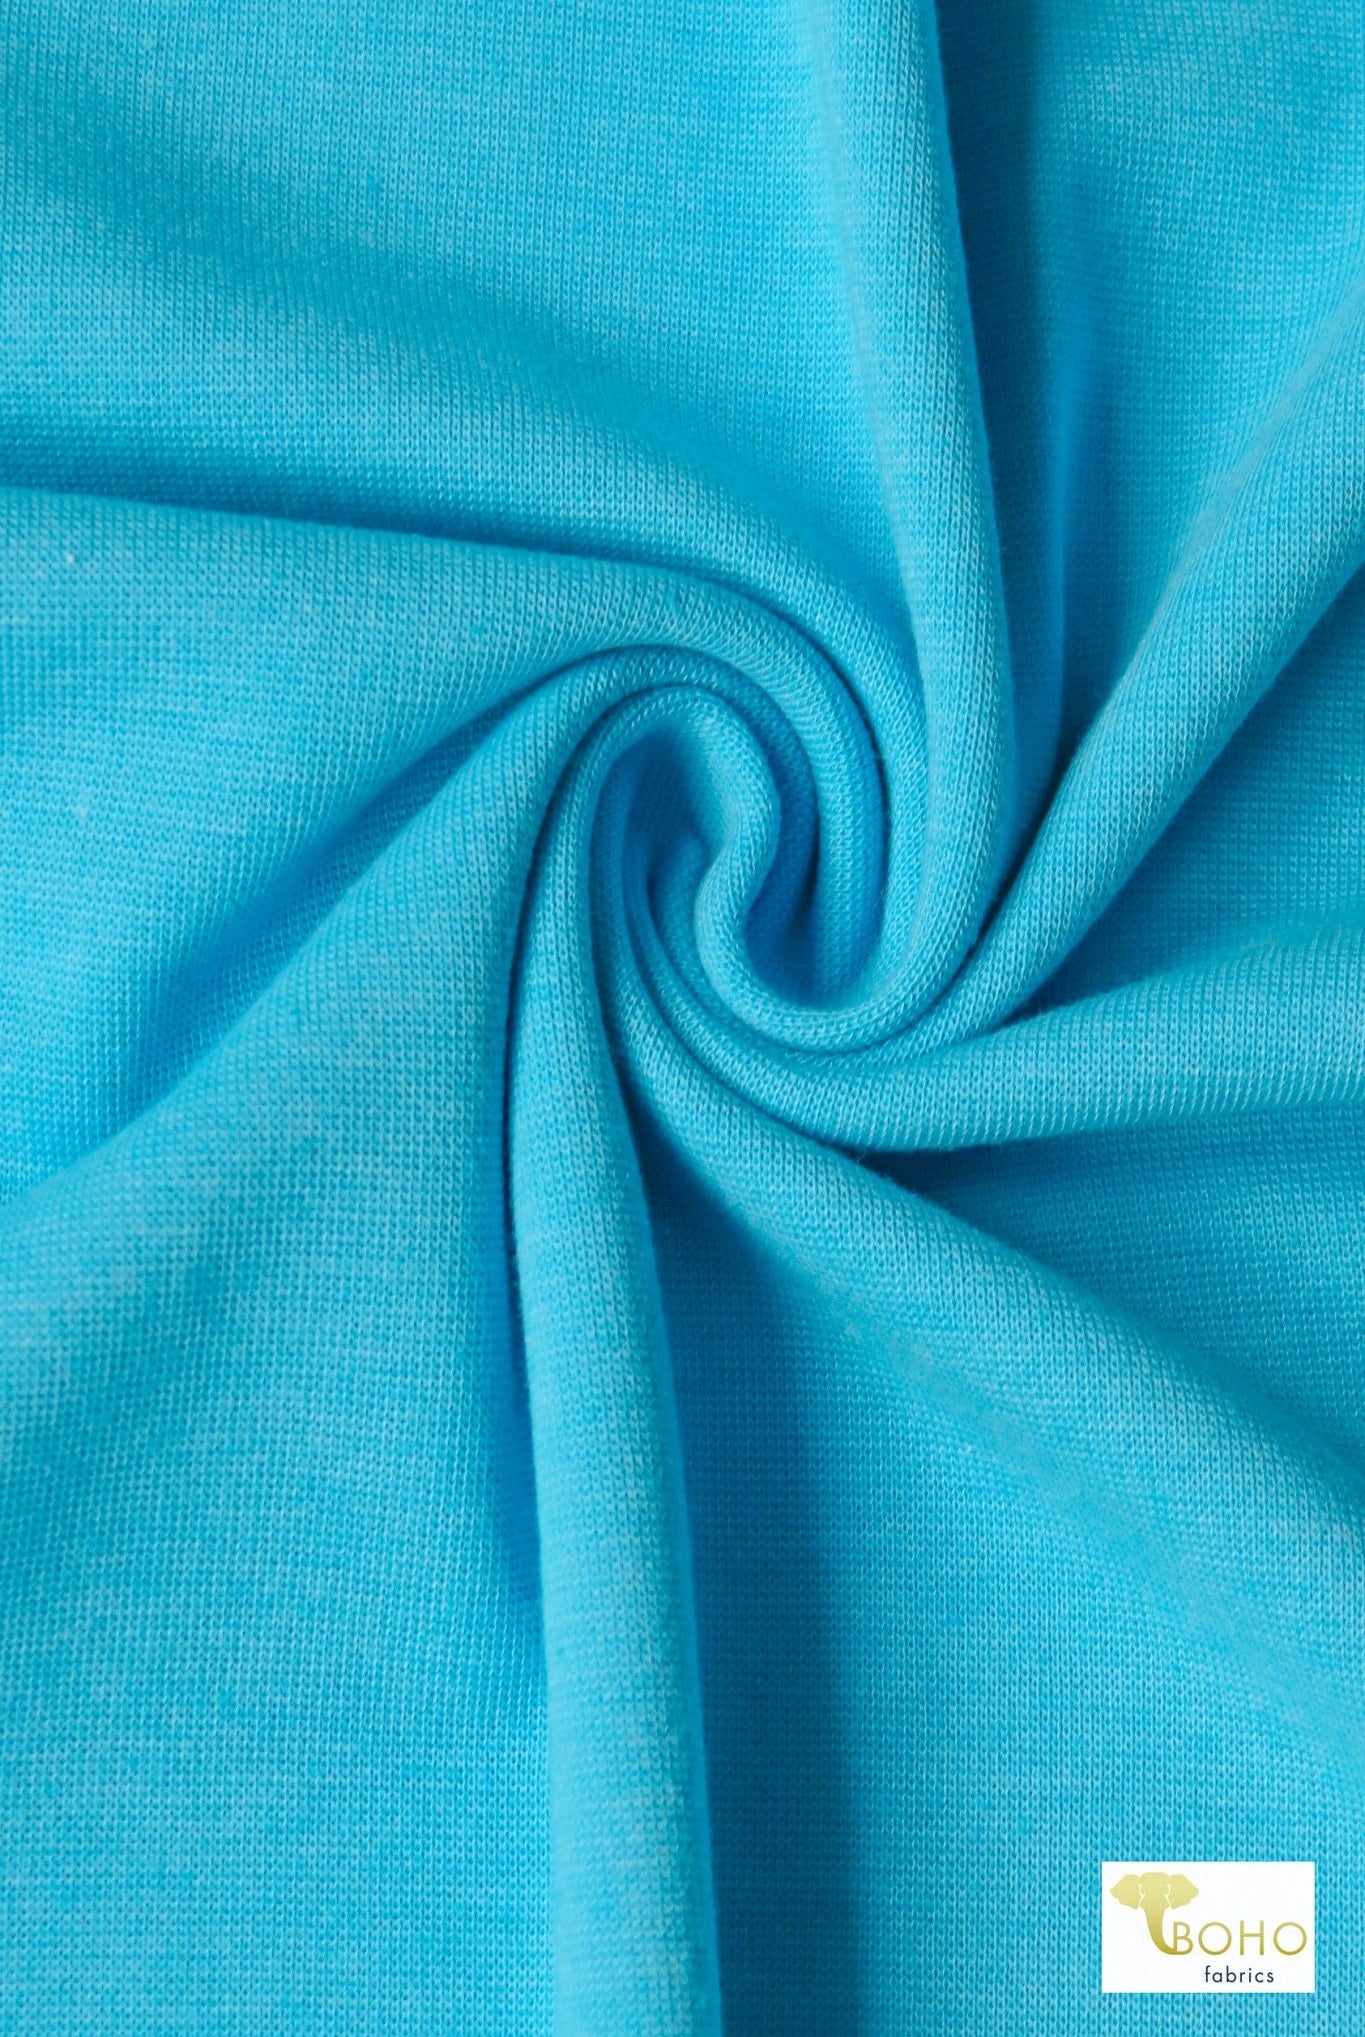 1x1 Rib Knit, Ultra Marine Blue. SOLD BY THE HALF YARD! - Boho Fabrics